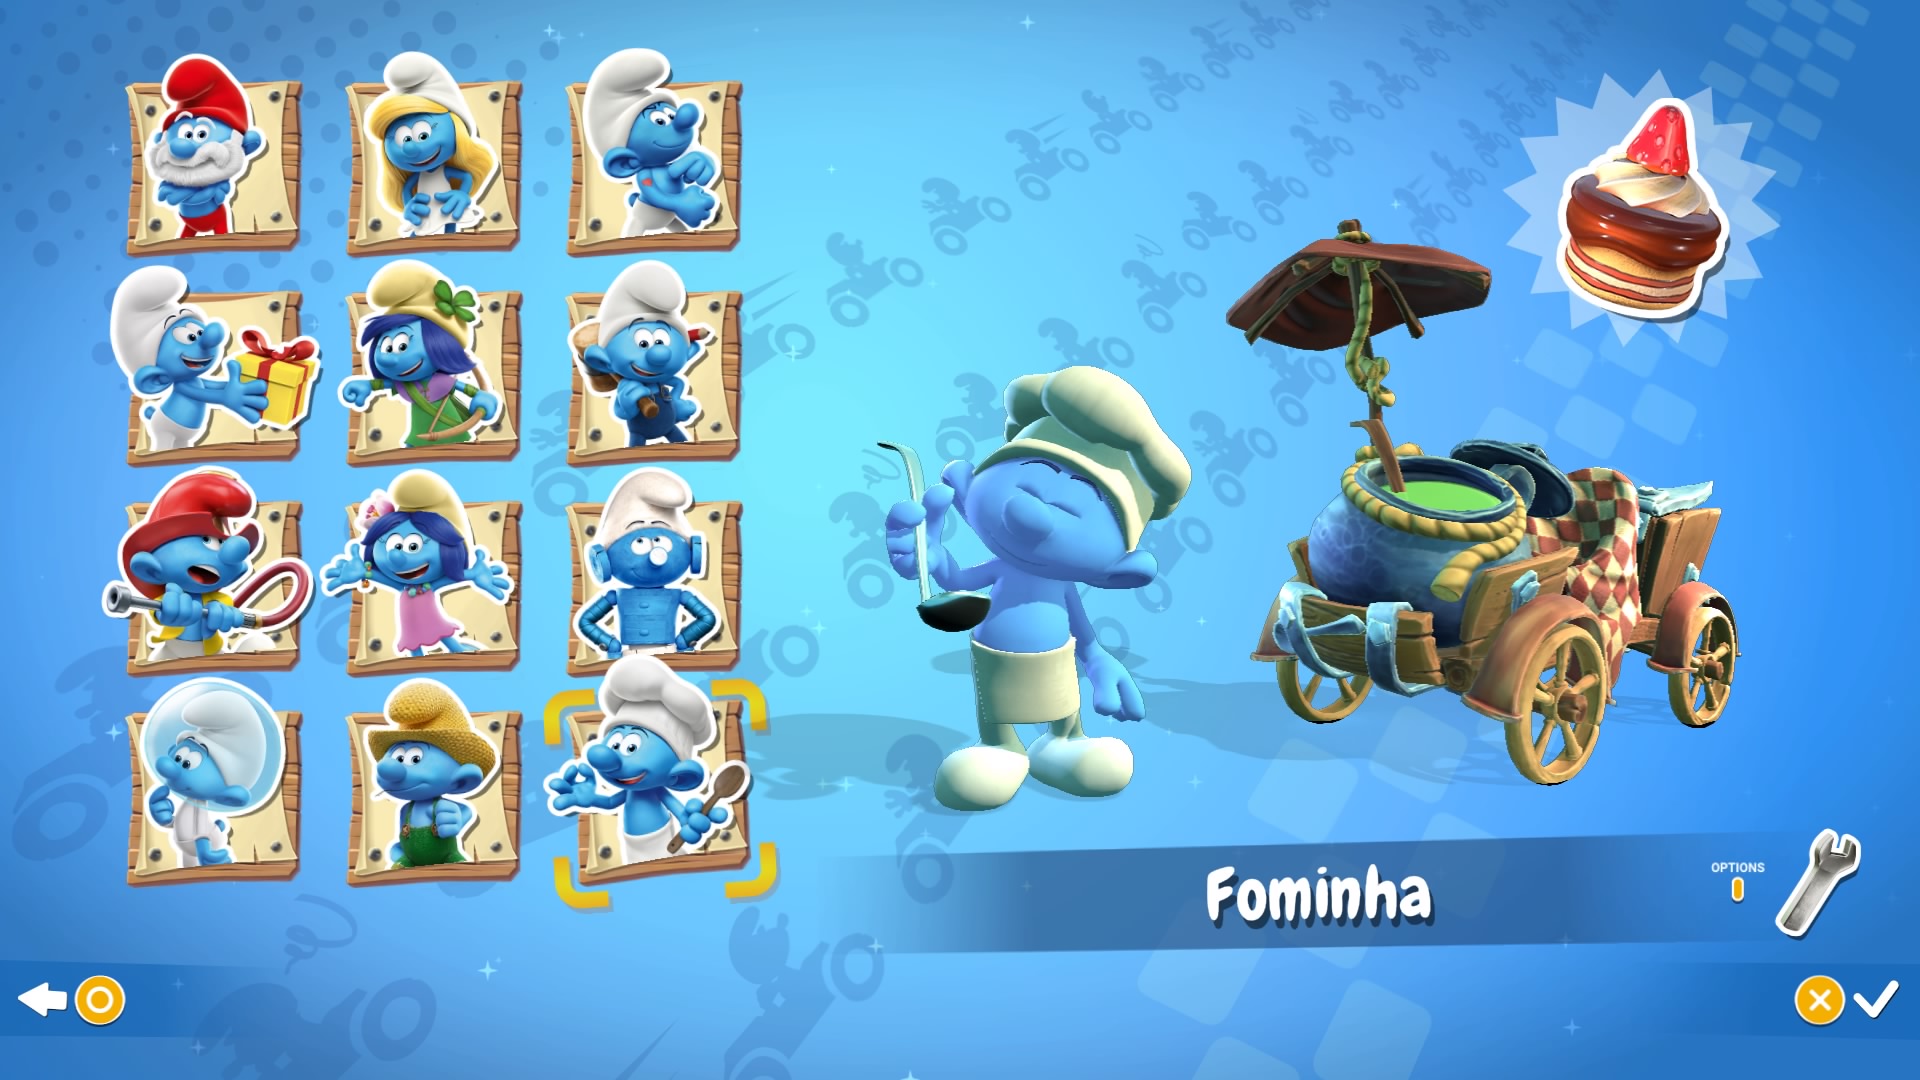 Análise: Smurfs - Missão Florrorosa (Multi) vai te levar para uma aventura  muito divertida - GameBlast